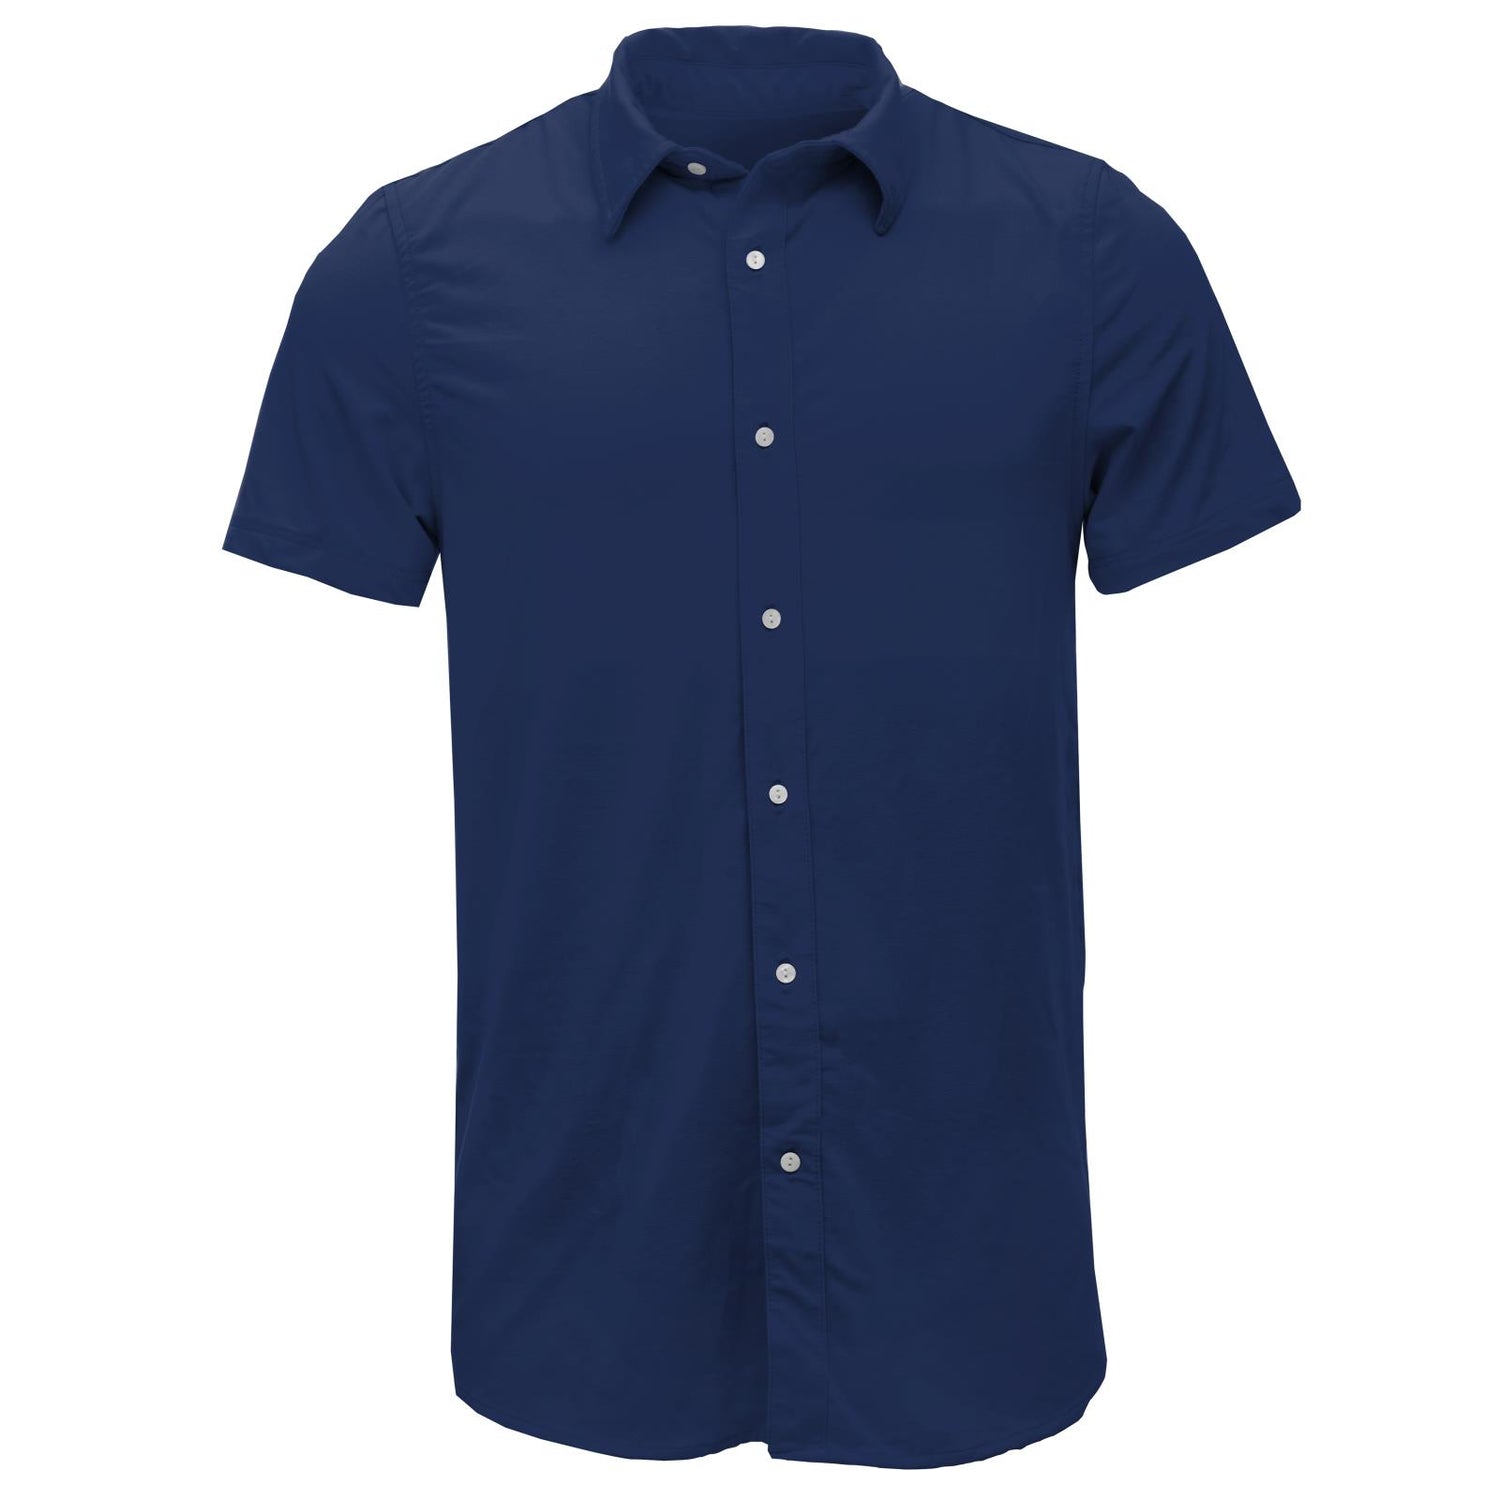 Men's Short Sleeve Button Down Shirt in Flag Blue